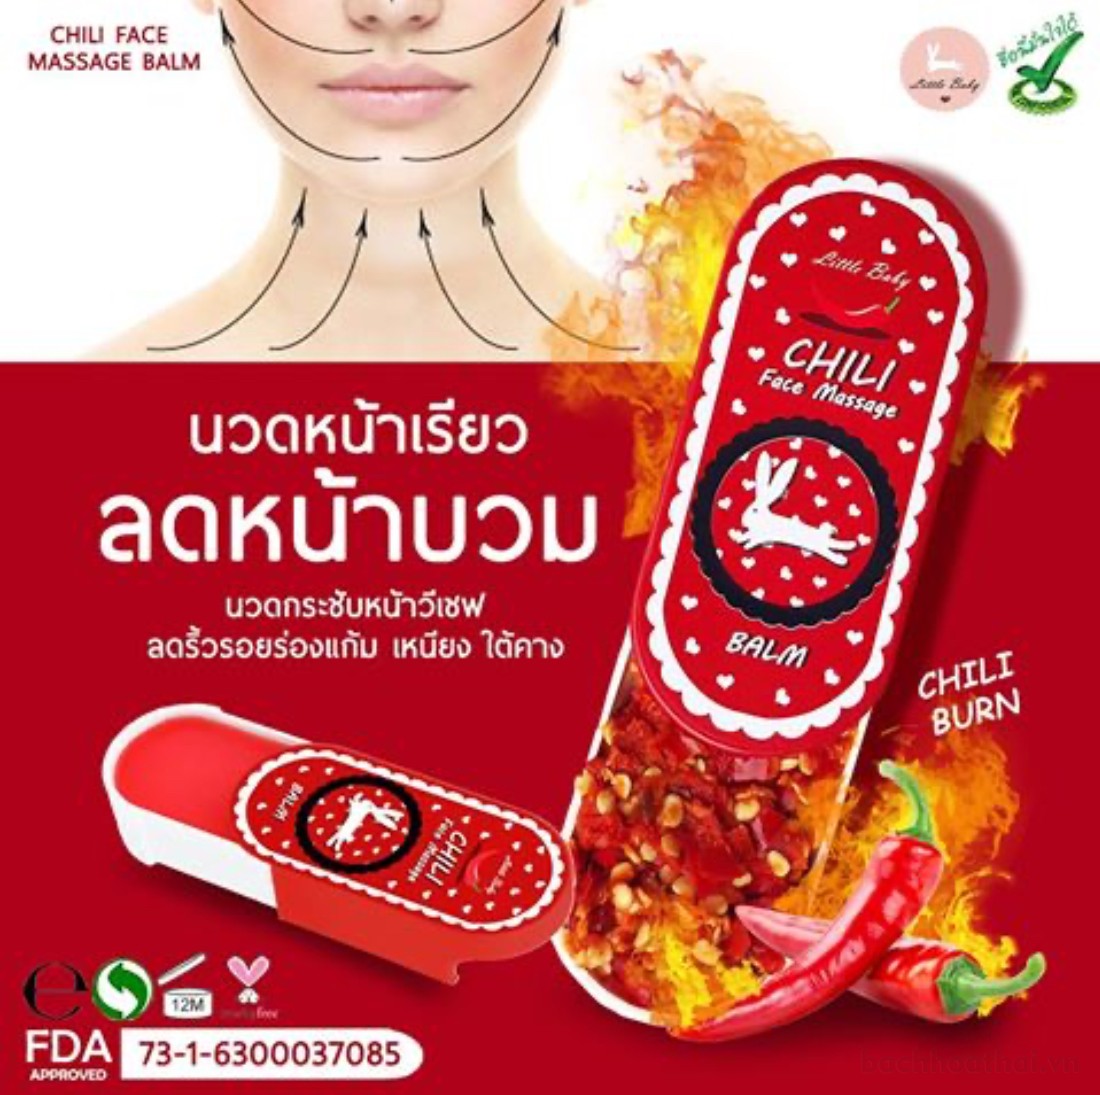 Hộp Gel Massage làm thon cằm Chili Face Massage Balm Thái Lan